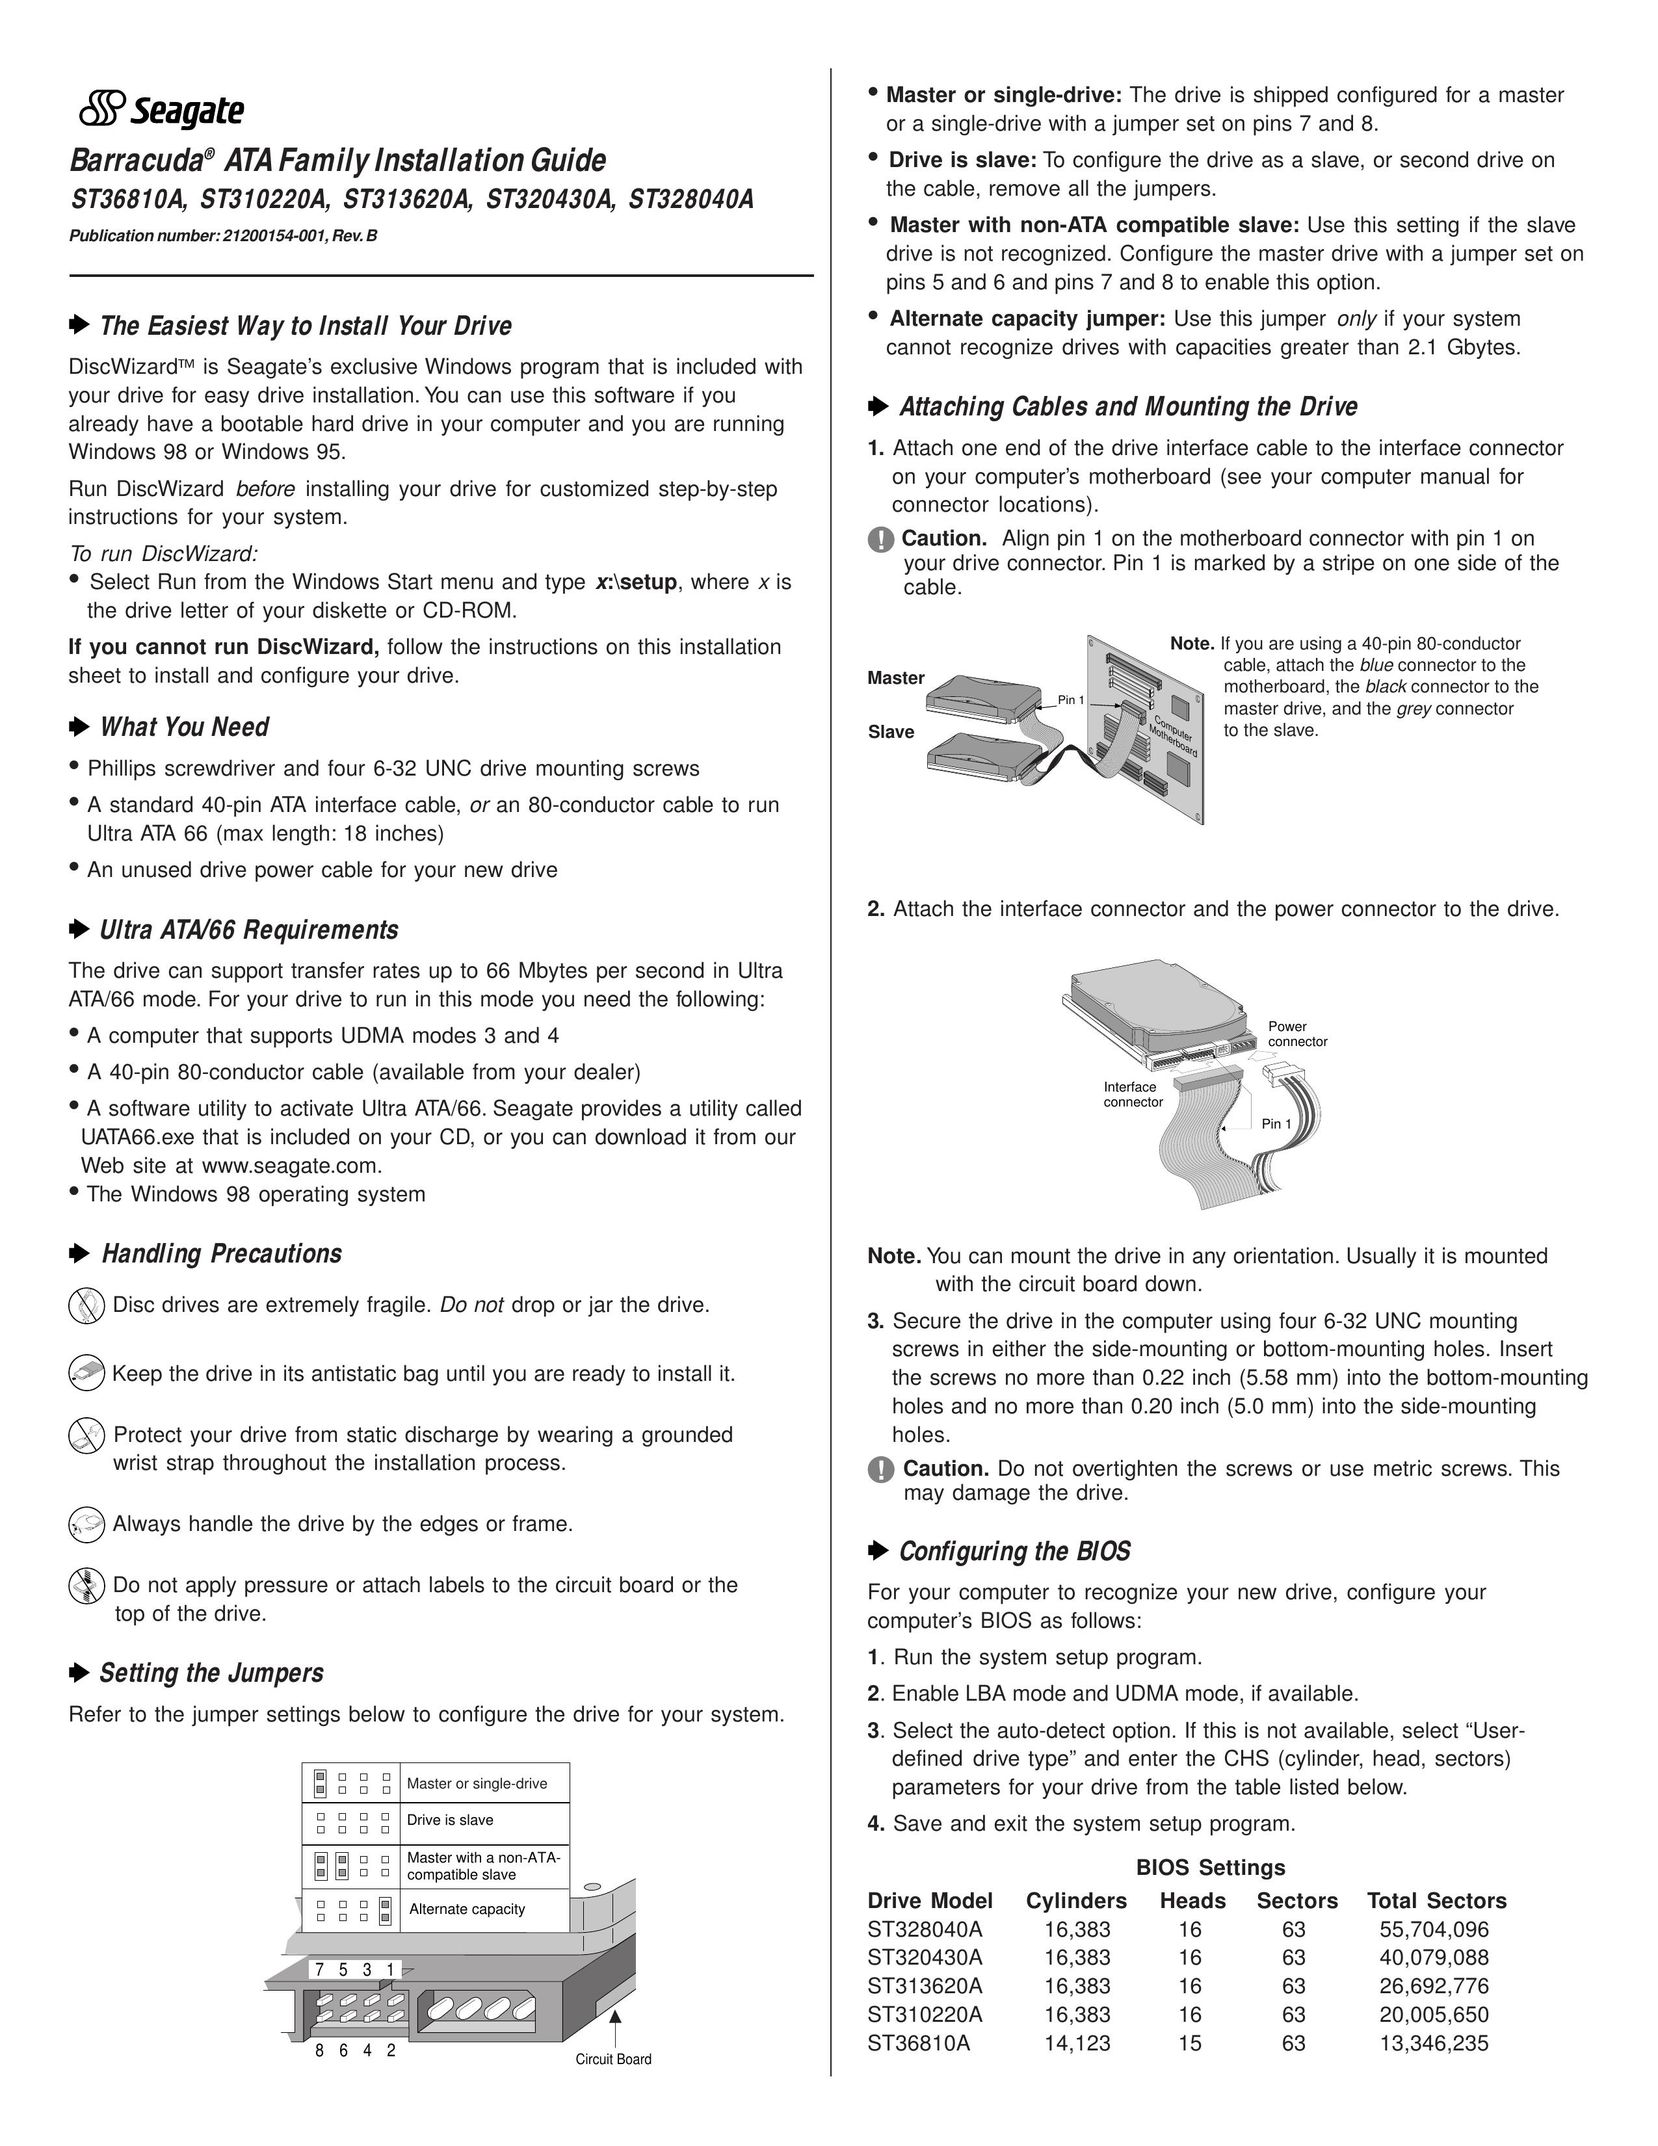 Barracuda Networks ST328040A Computer Drive User Manual